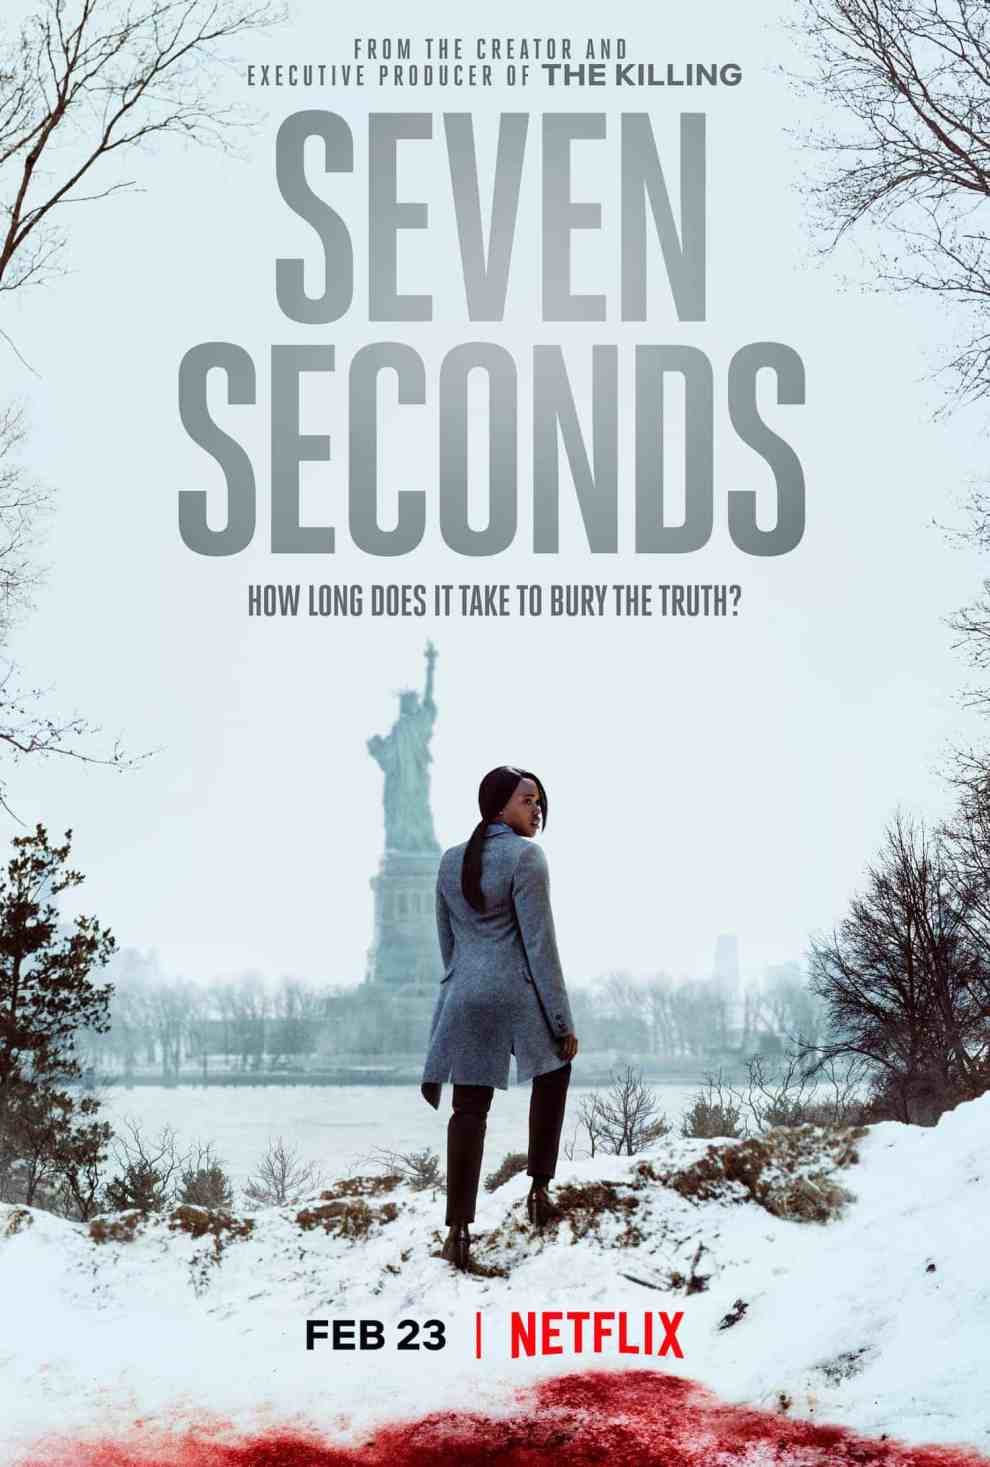 Netflix ‘Seven Seconds’ promo